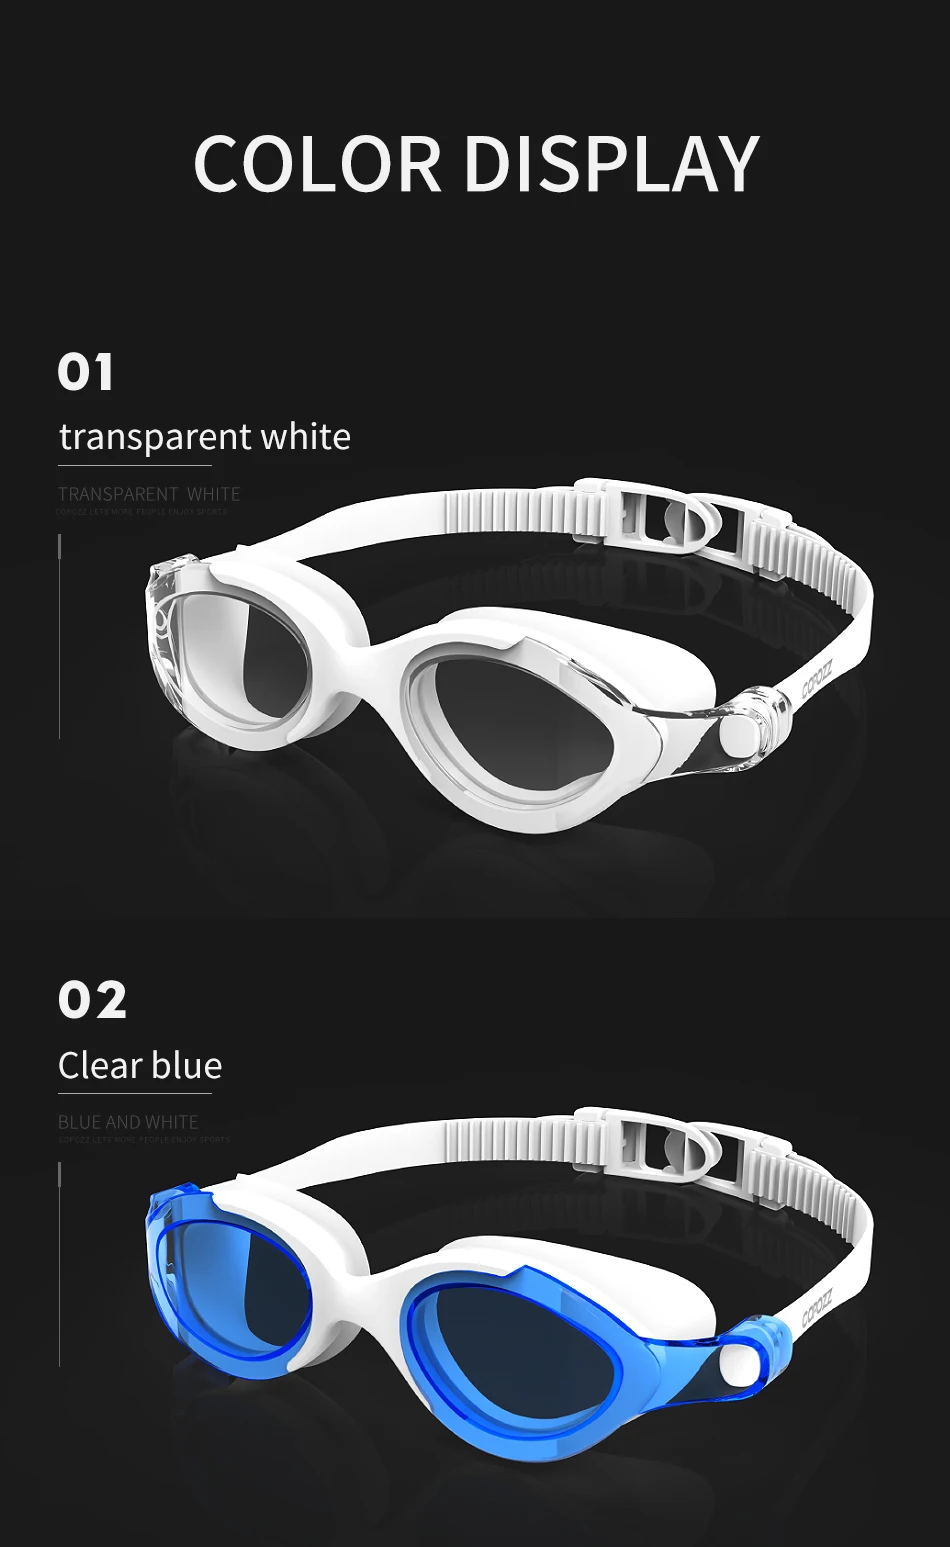 COPOZZ Professional HD Swimming Goggles Double Anti-Fog Adjustable Swimming Glasses Silicone Big view goggles for Men Women